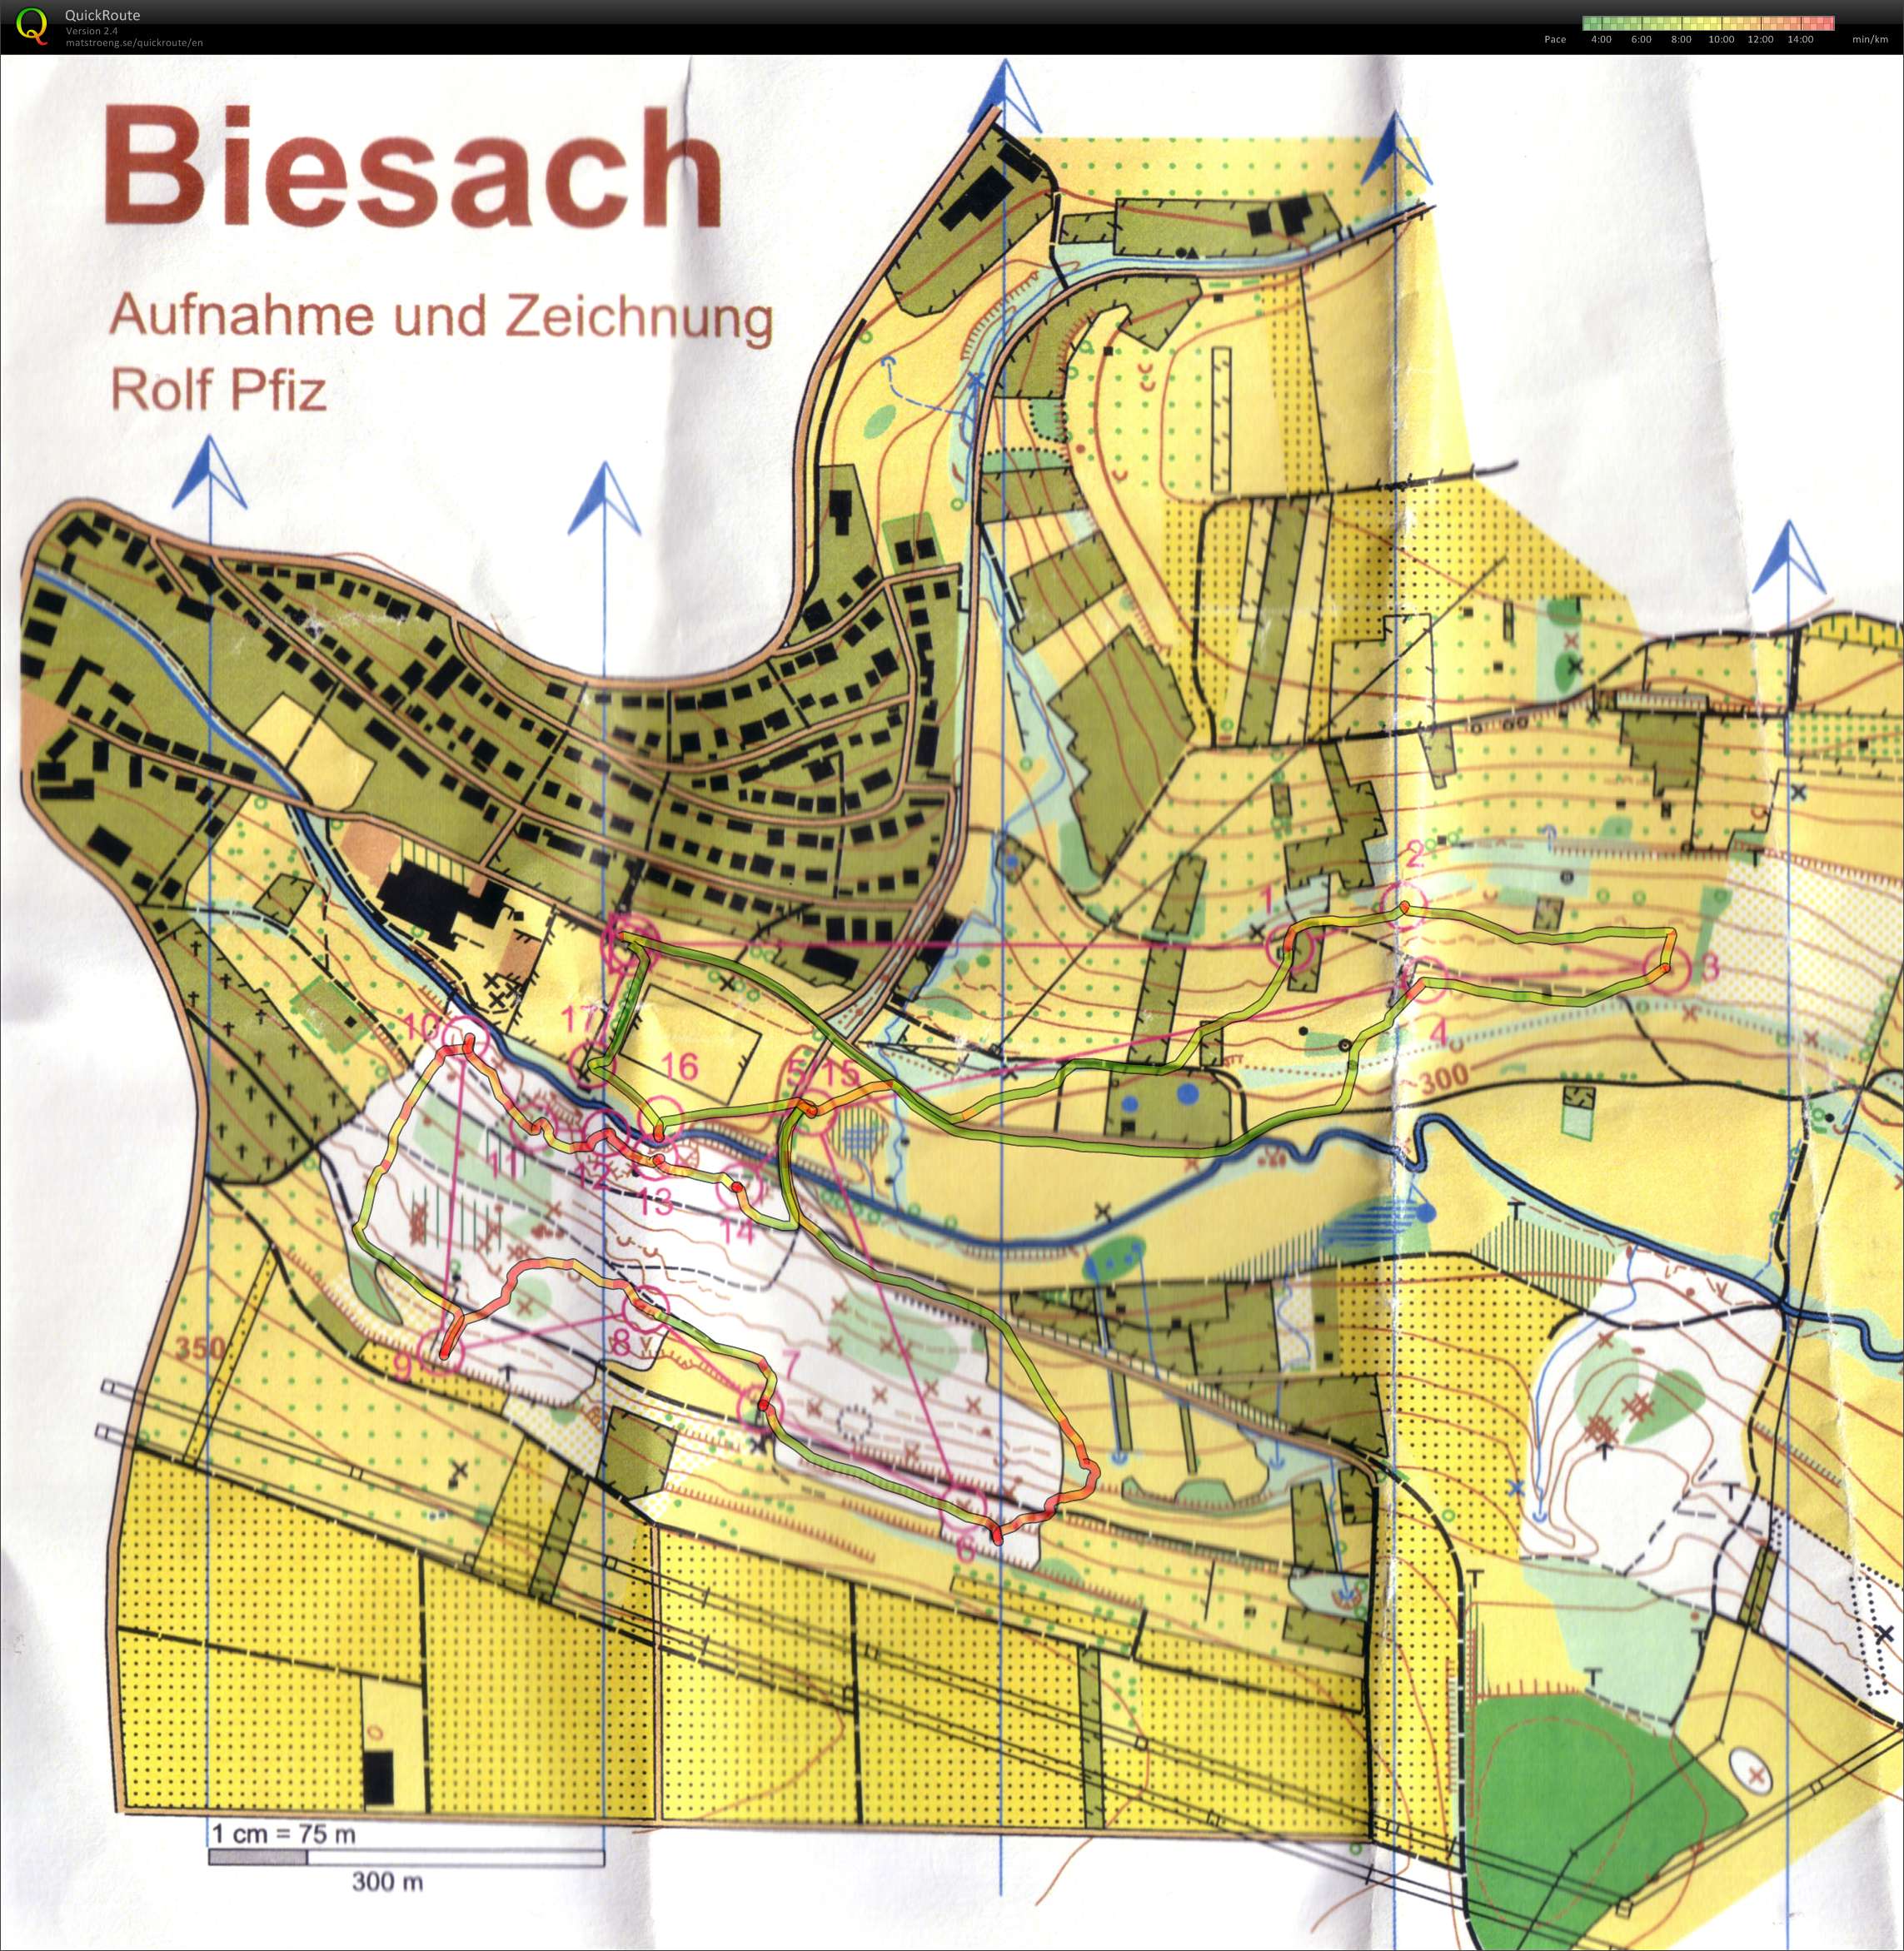 Training Biesach (07/09/2011)